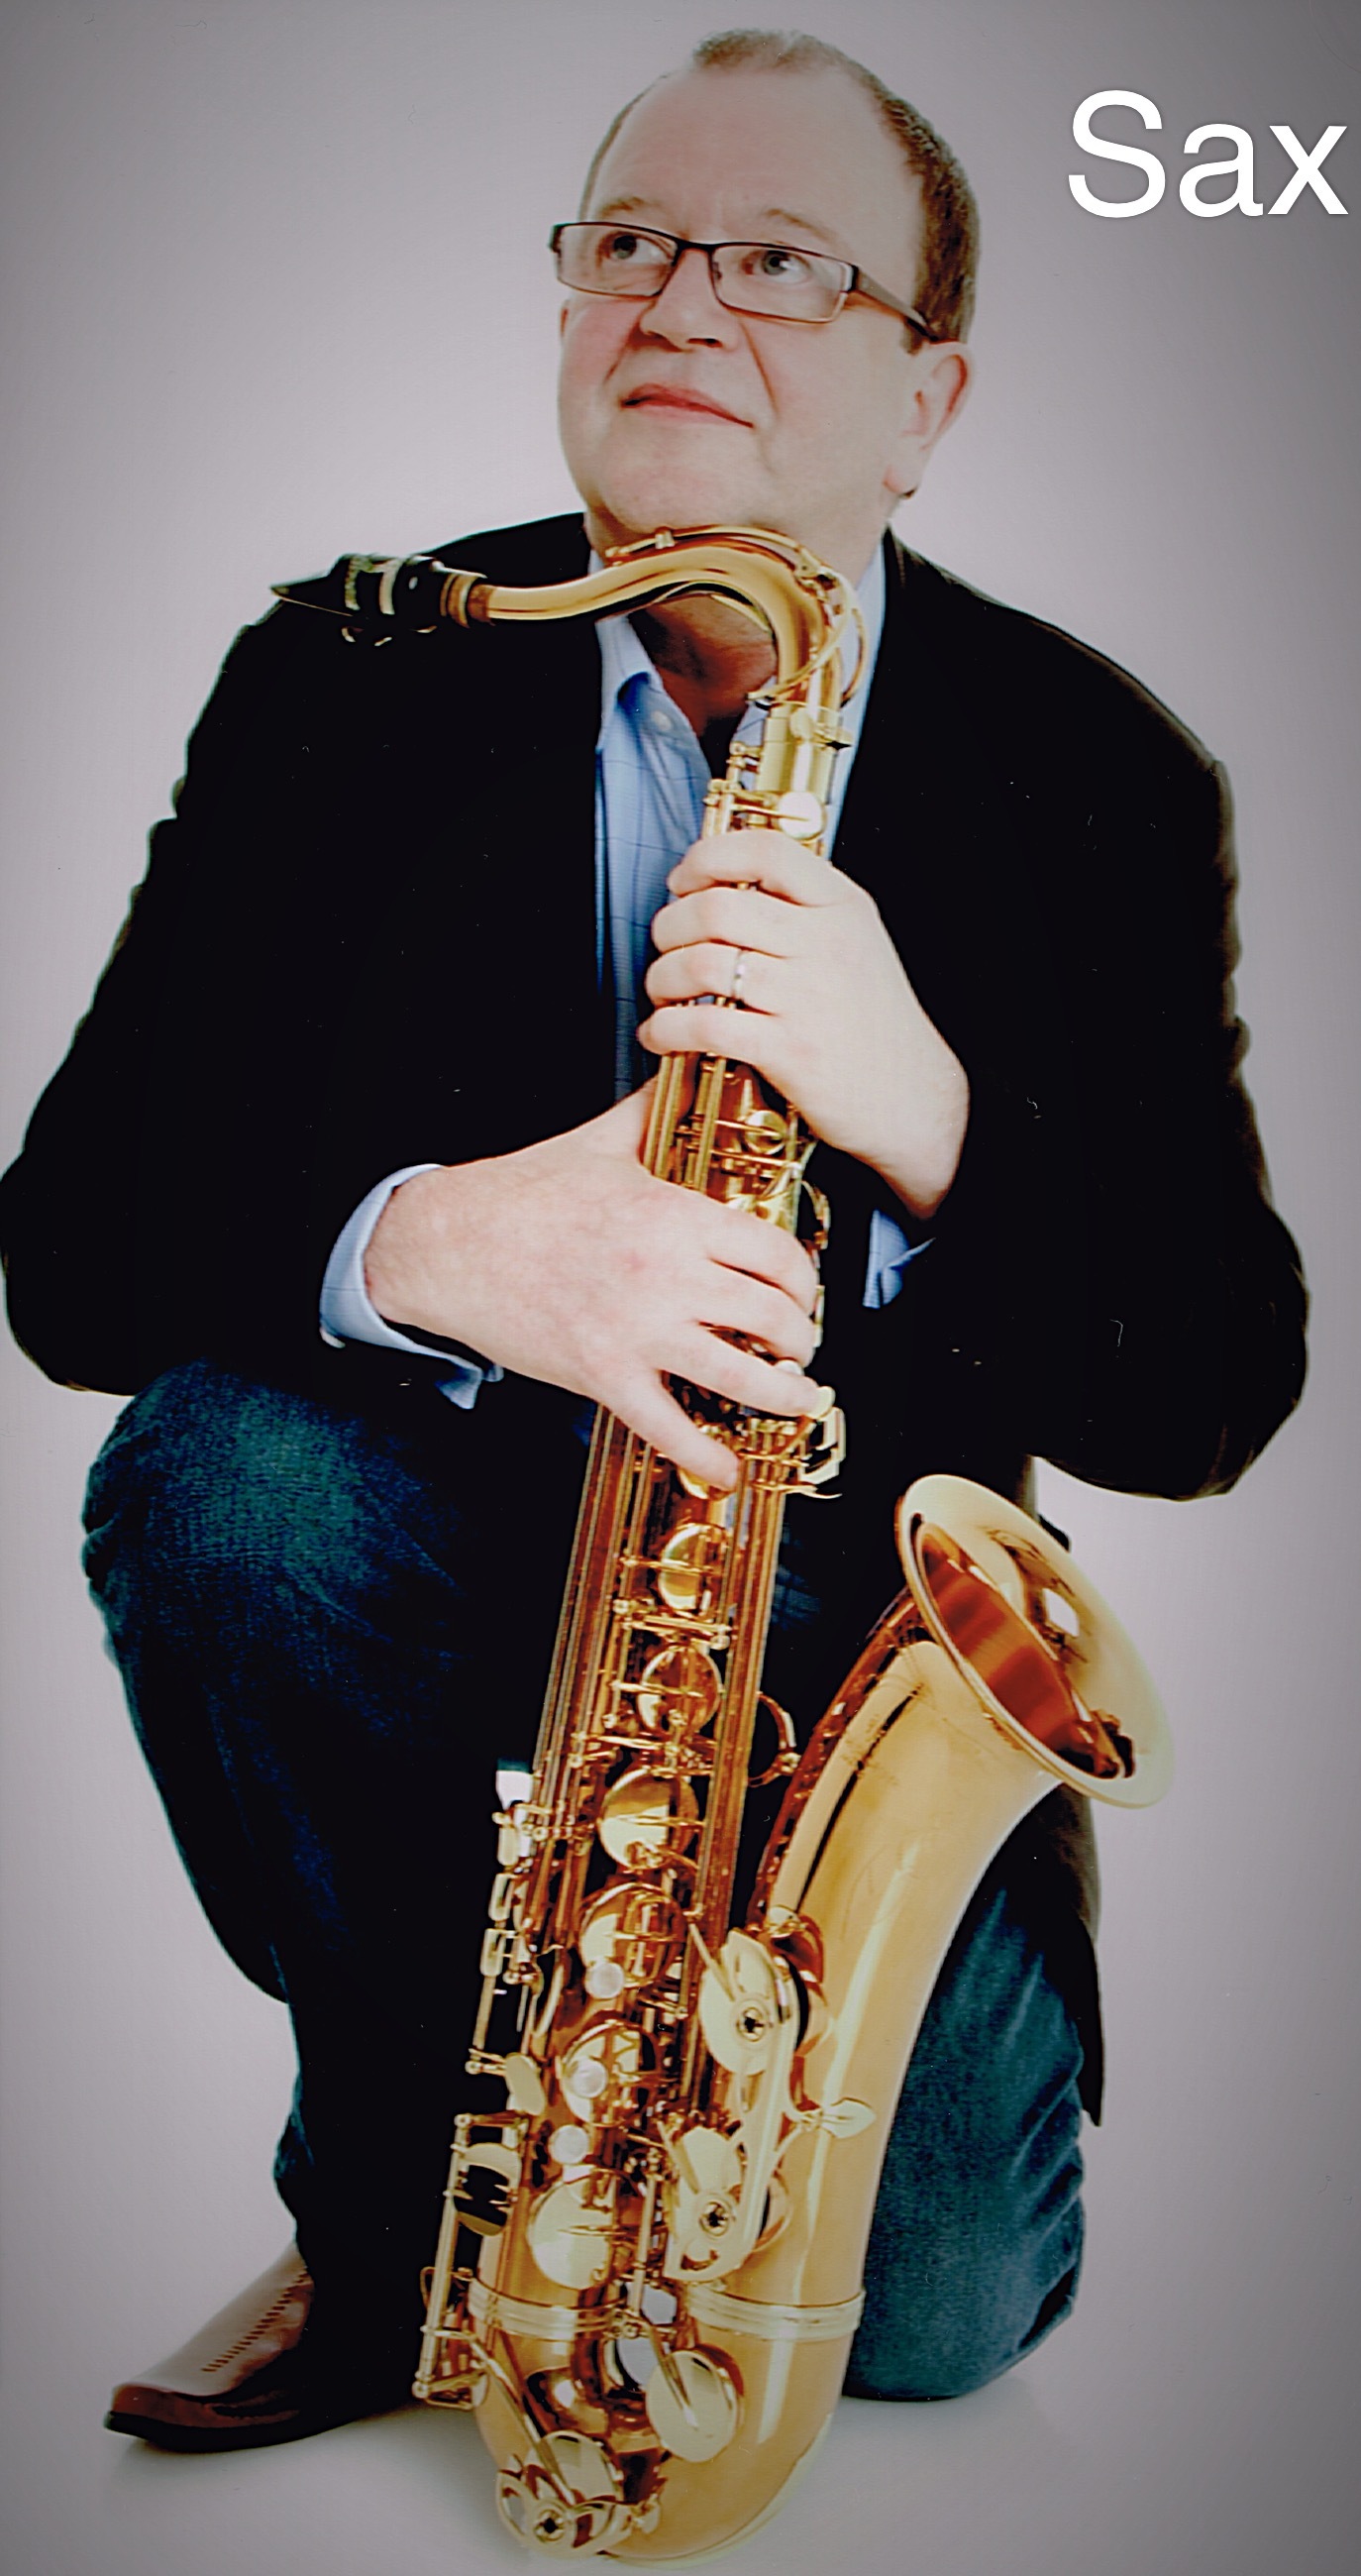 Saxophonist Ken in Perth, the Scottish Highlands